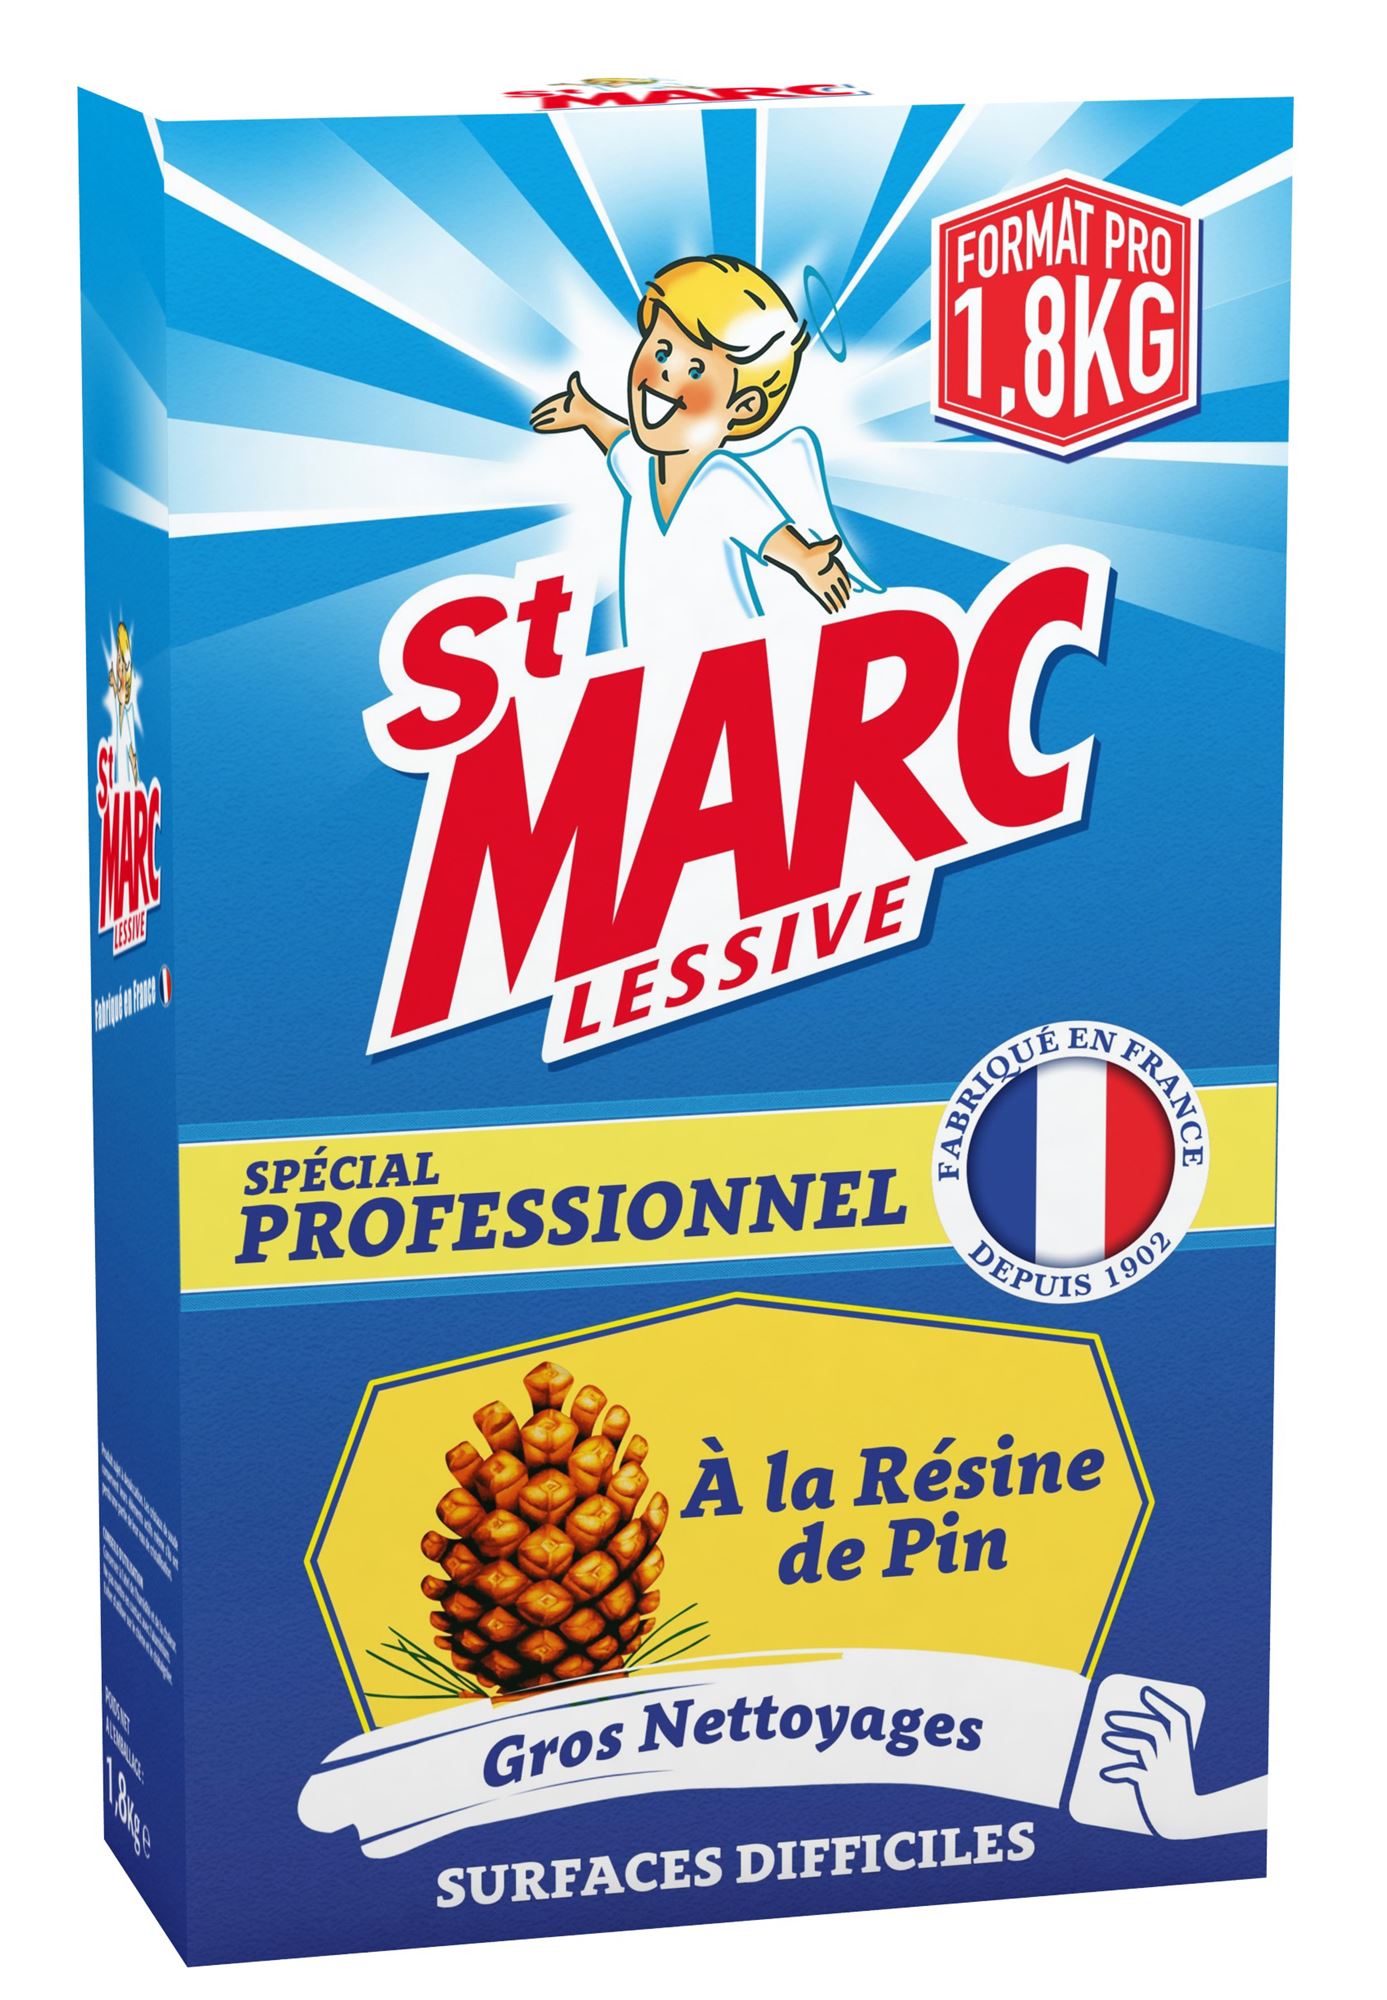 Lessive saint Marc promo